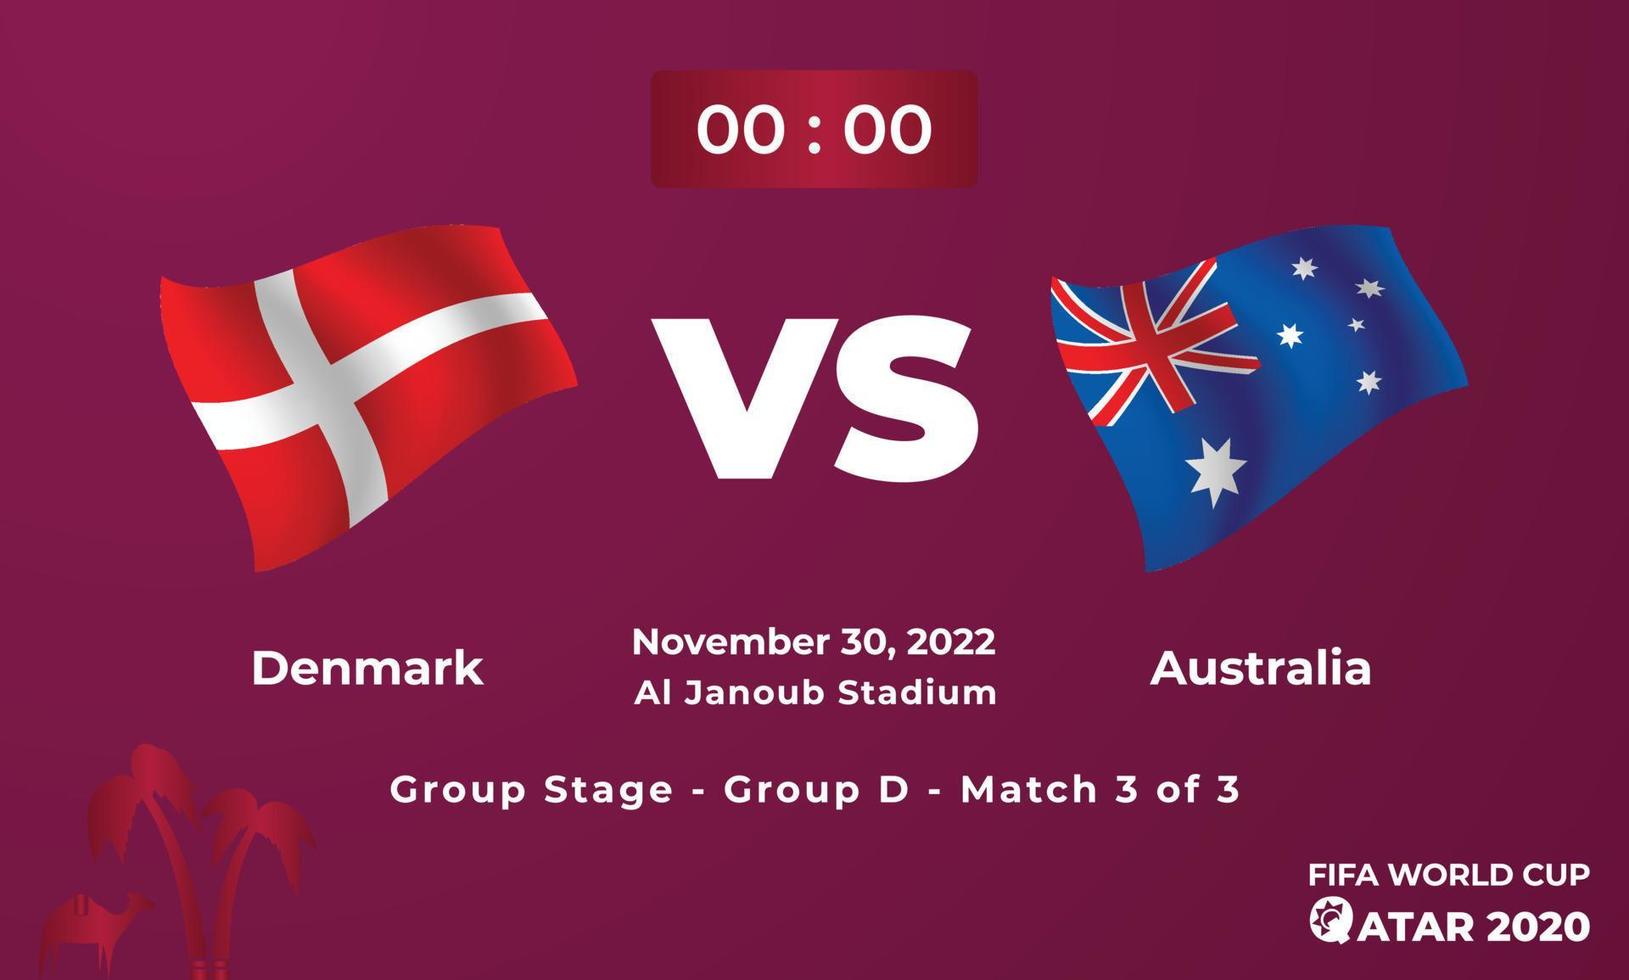 Denmark VS Australia Football MatchTemplate, FIFA World Cup in Qatar 2022 vector